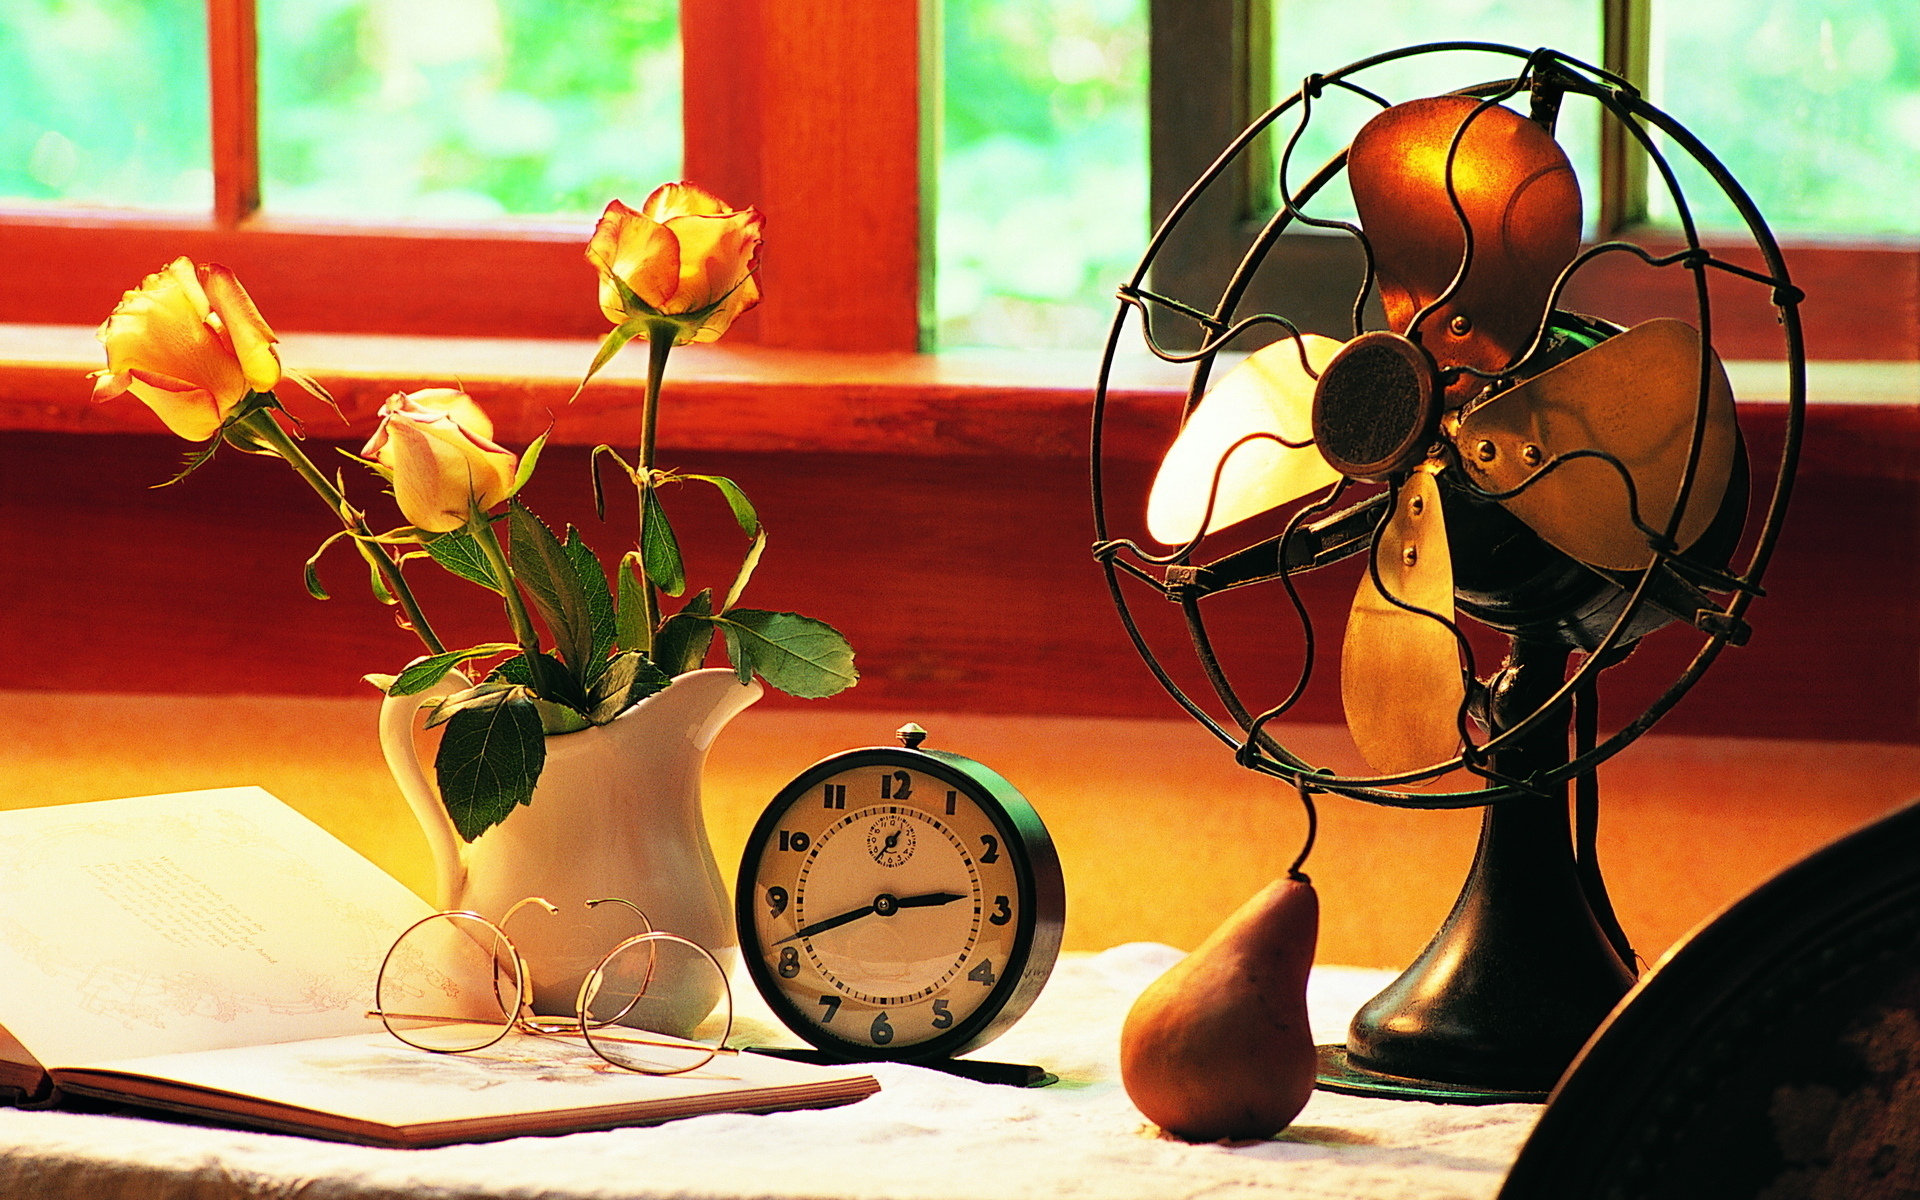 blades, Fan, Desk, Window, Work, Clock, Alarm, Background, Pear, Glasses, Flowers, Pitcher, Roses, Book Wallpaper